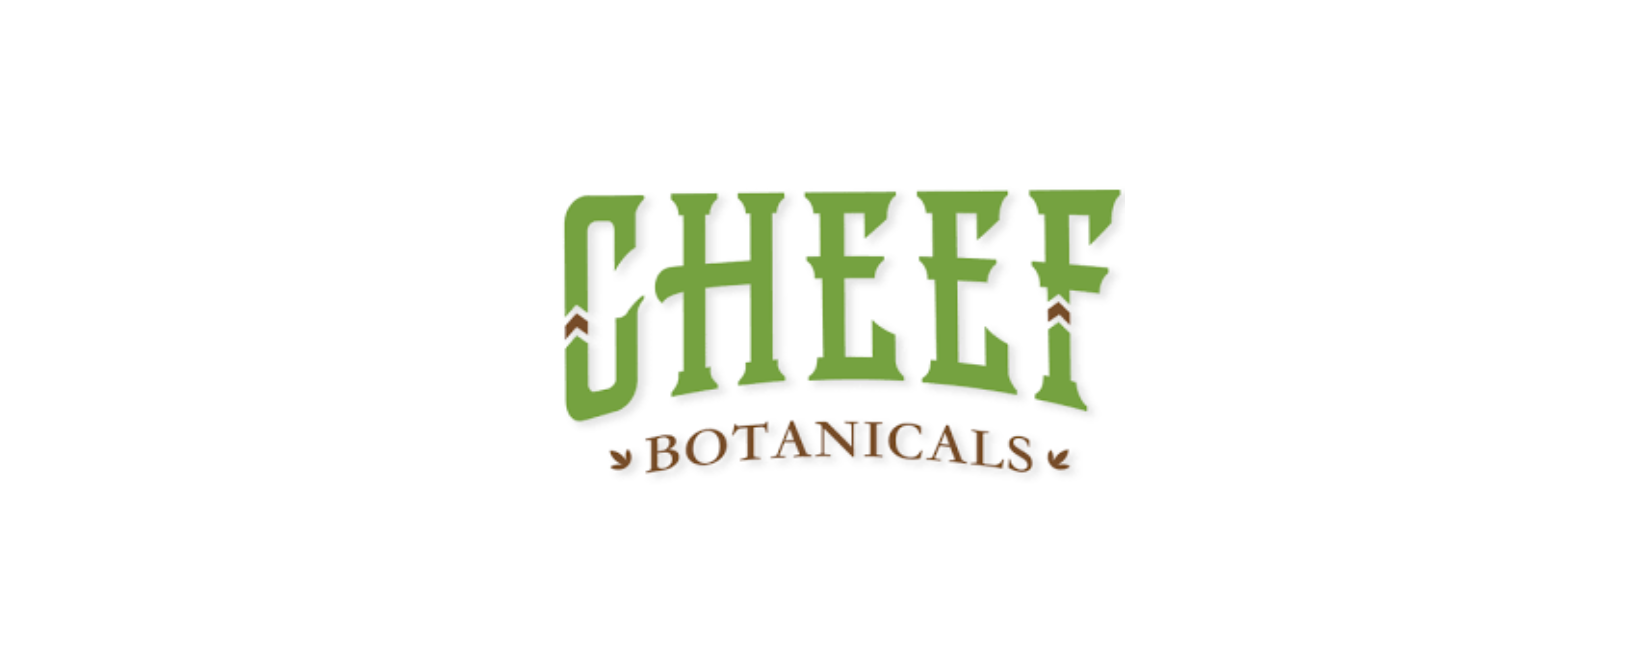 Cheef Botanicals Discount Code 2022